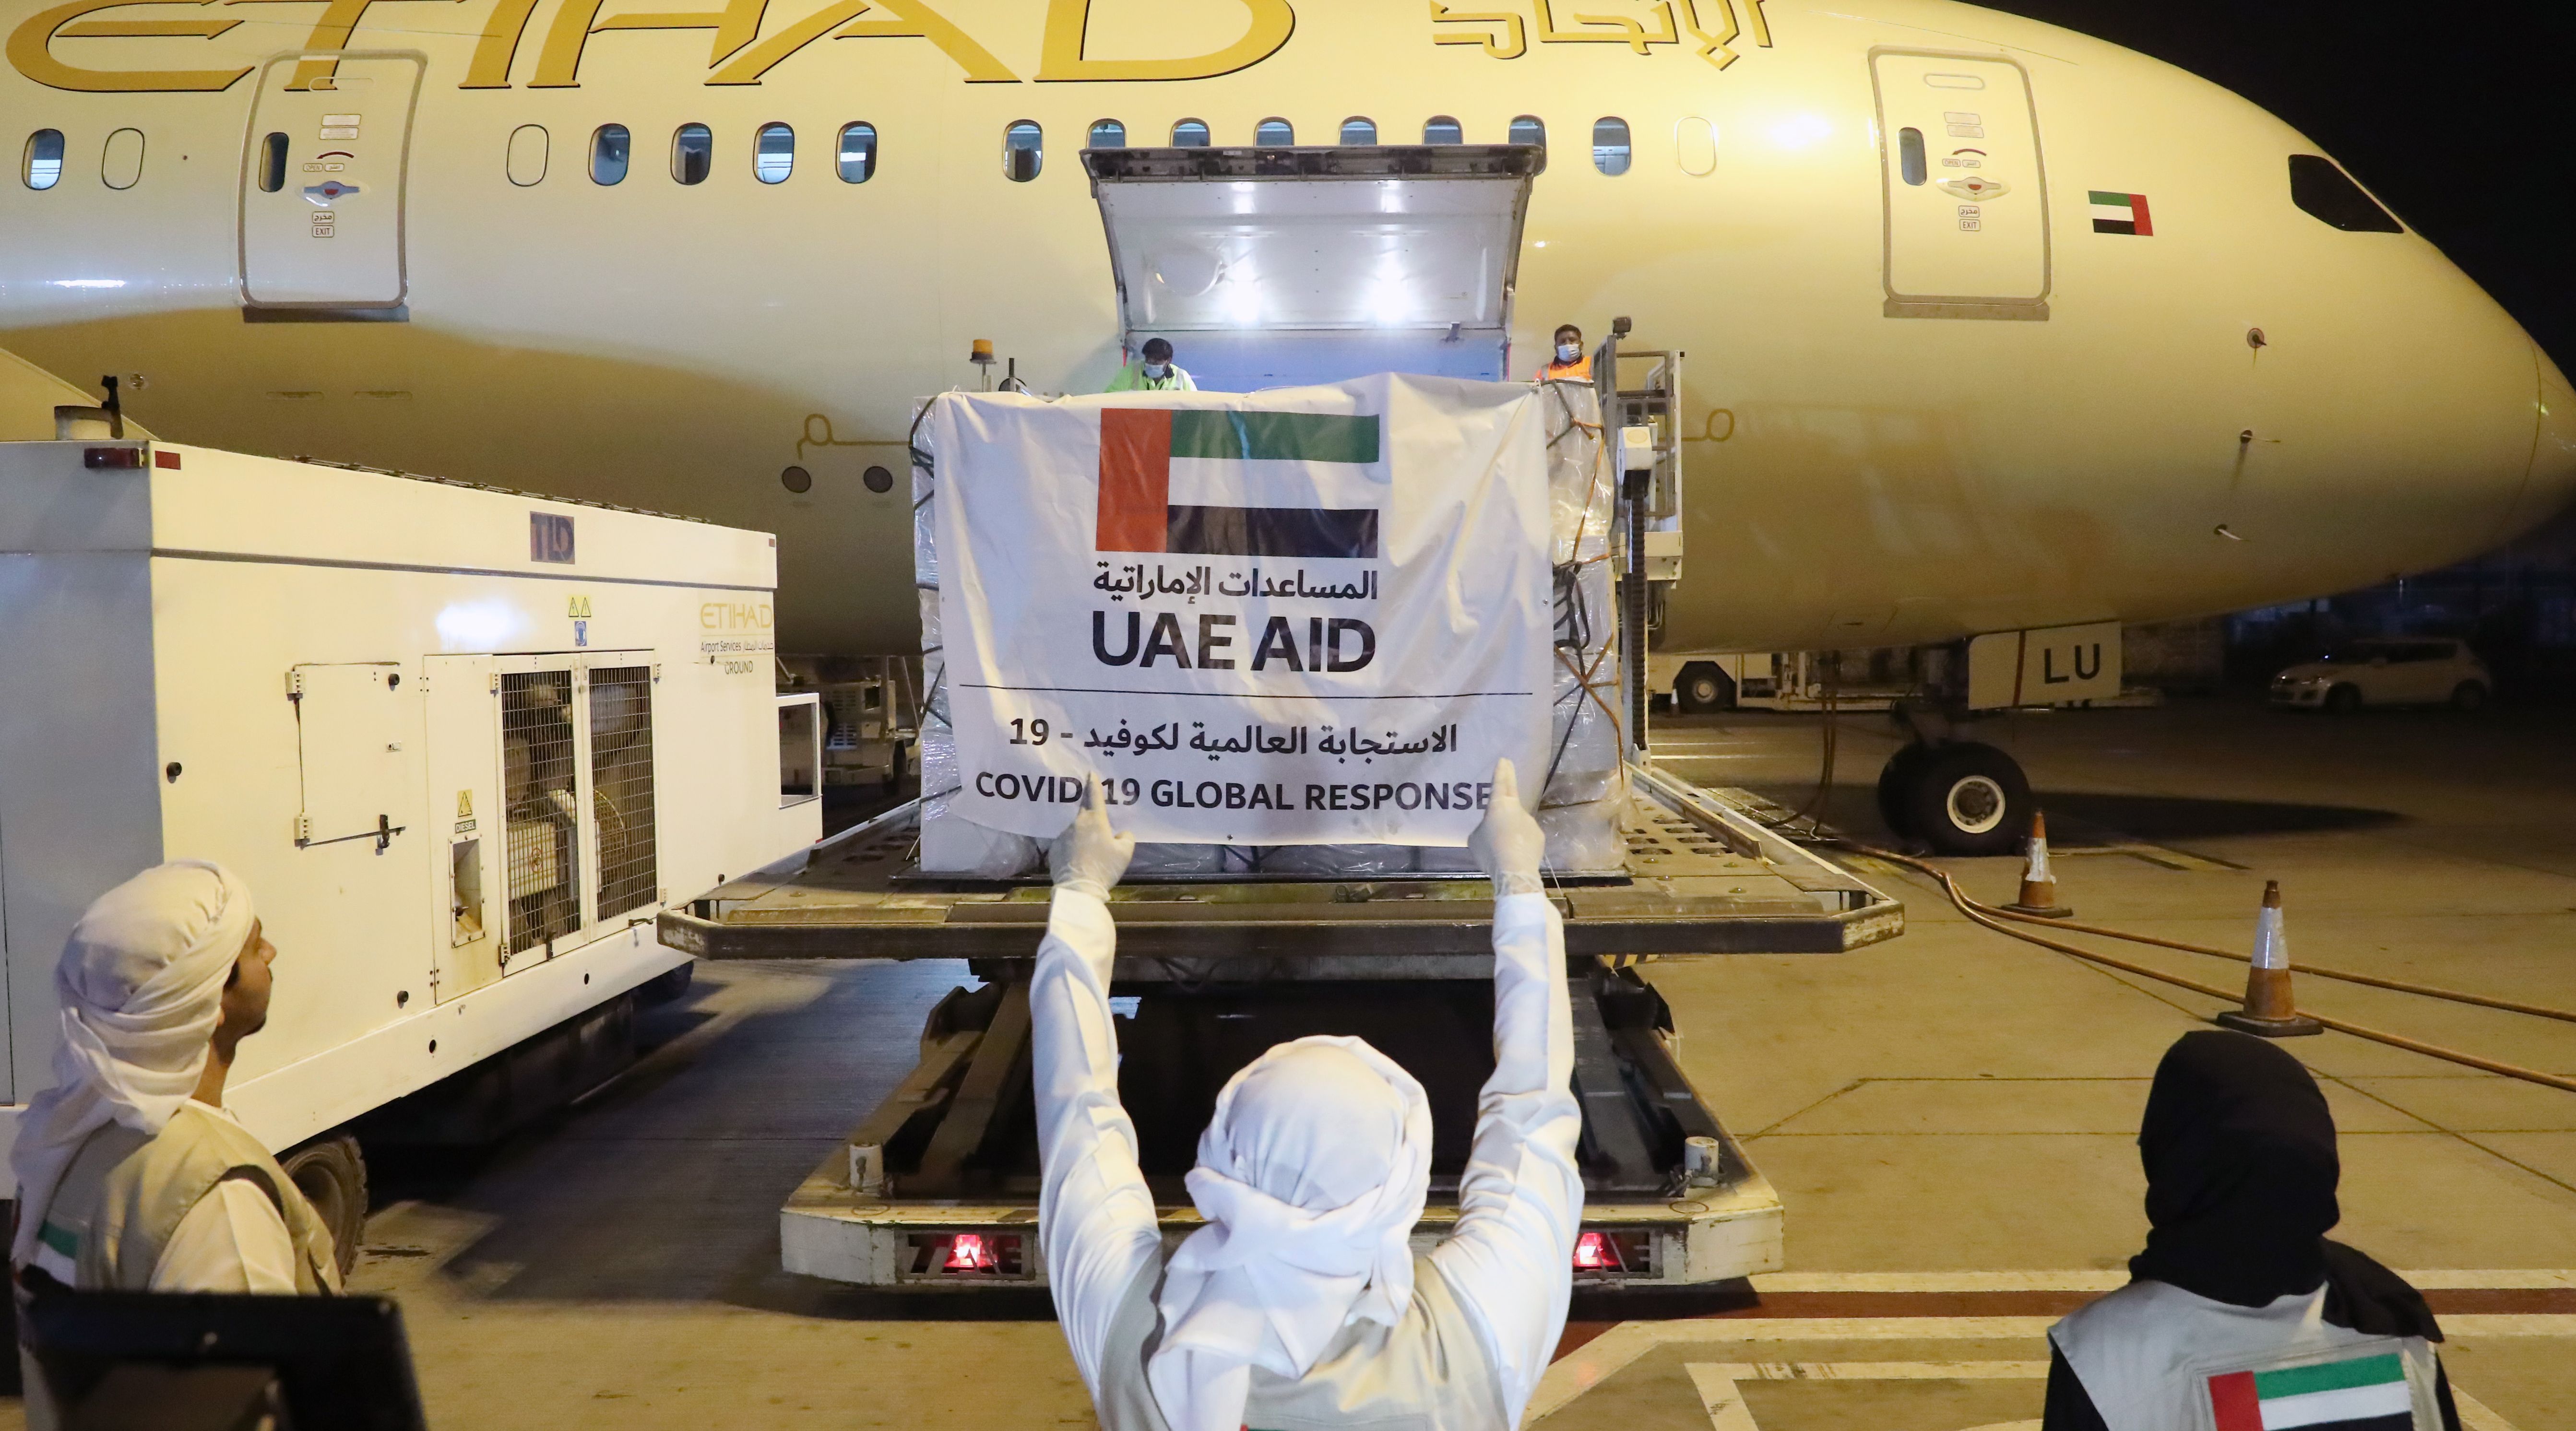 UAE sends medical aid to Lima, Peru in fight against COVID-19